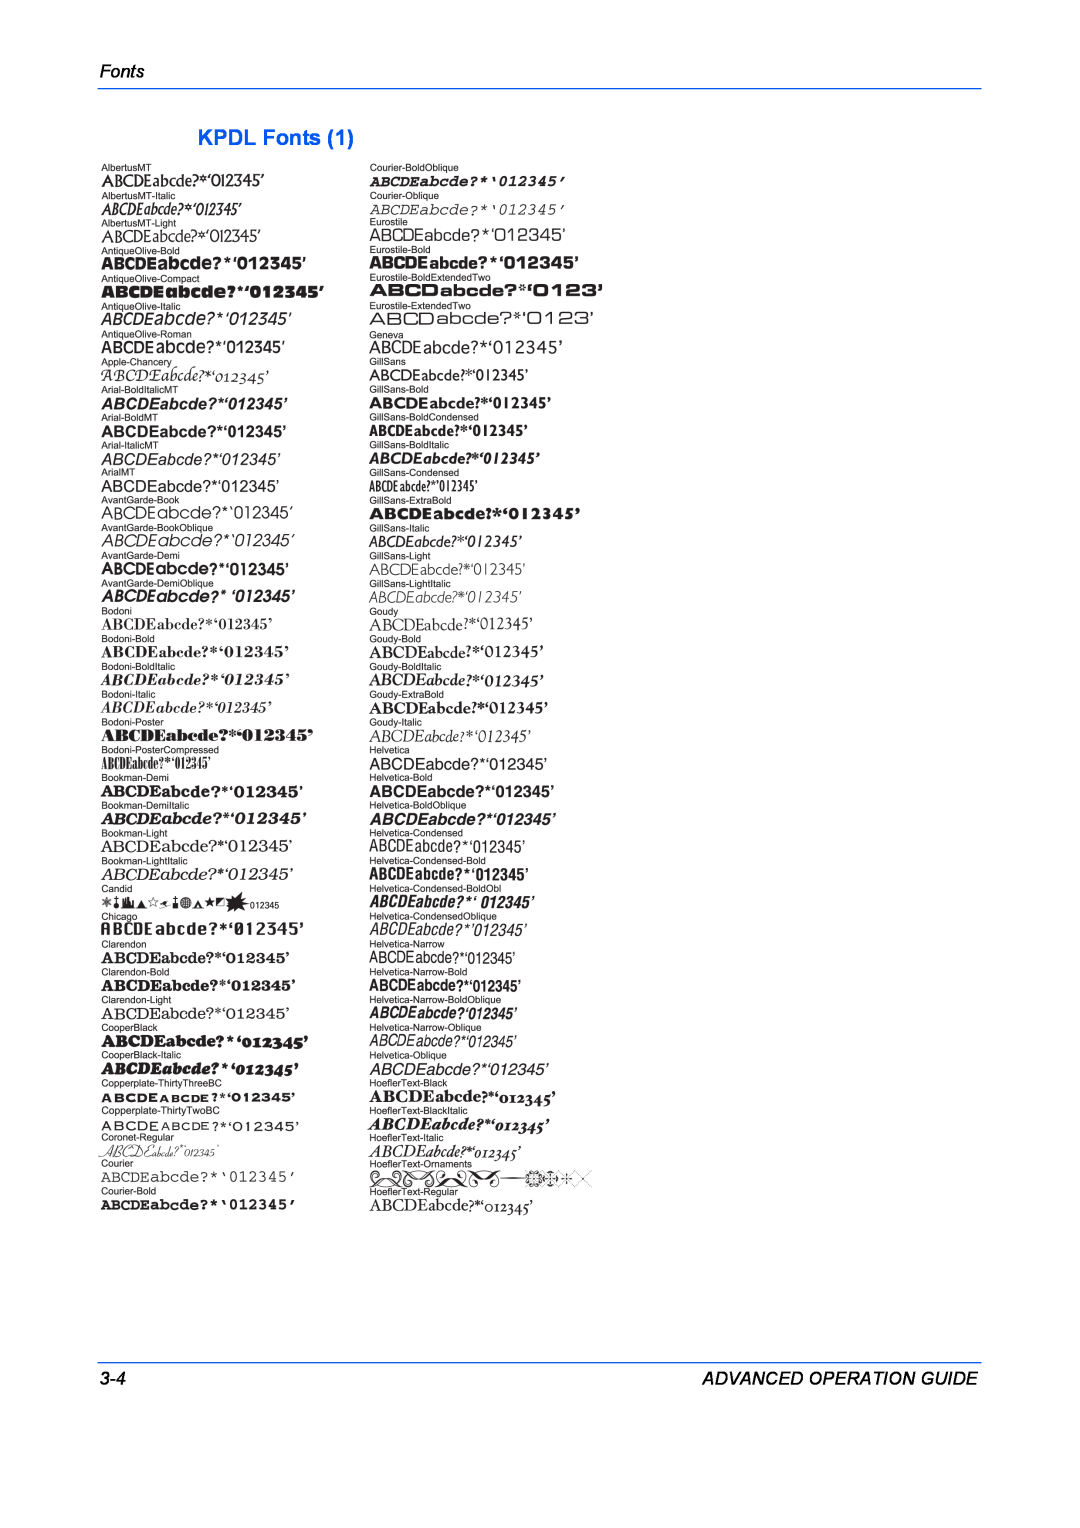 Kyocera 9530DN manual KPDL Fonts, Advanced Operation Guide 